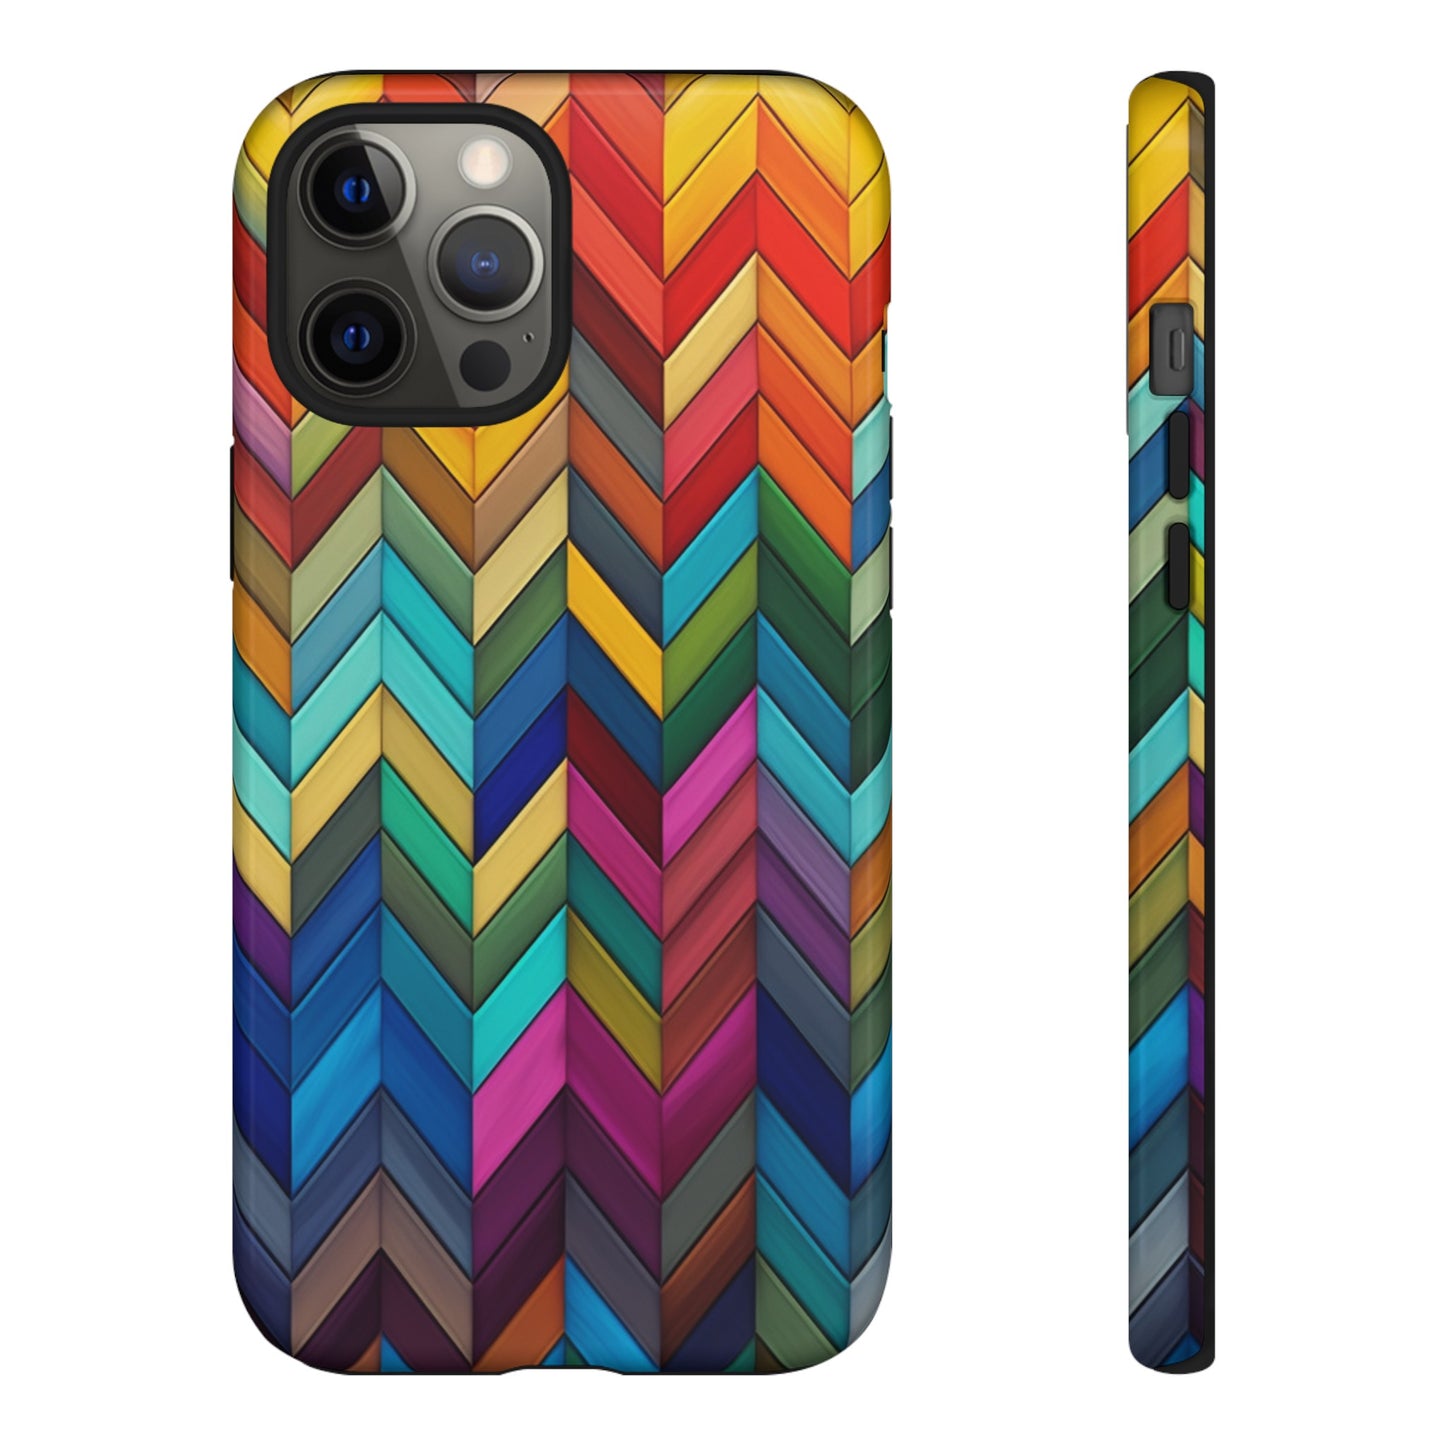 Mixed-Up Rainbow Tough Phone Case